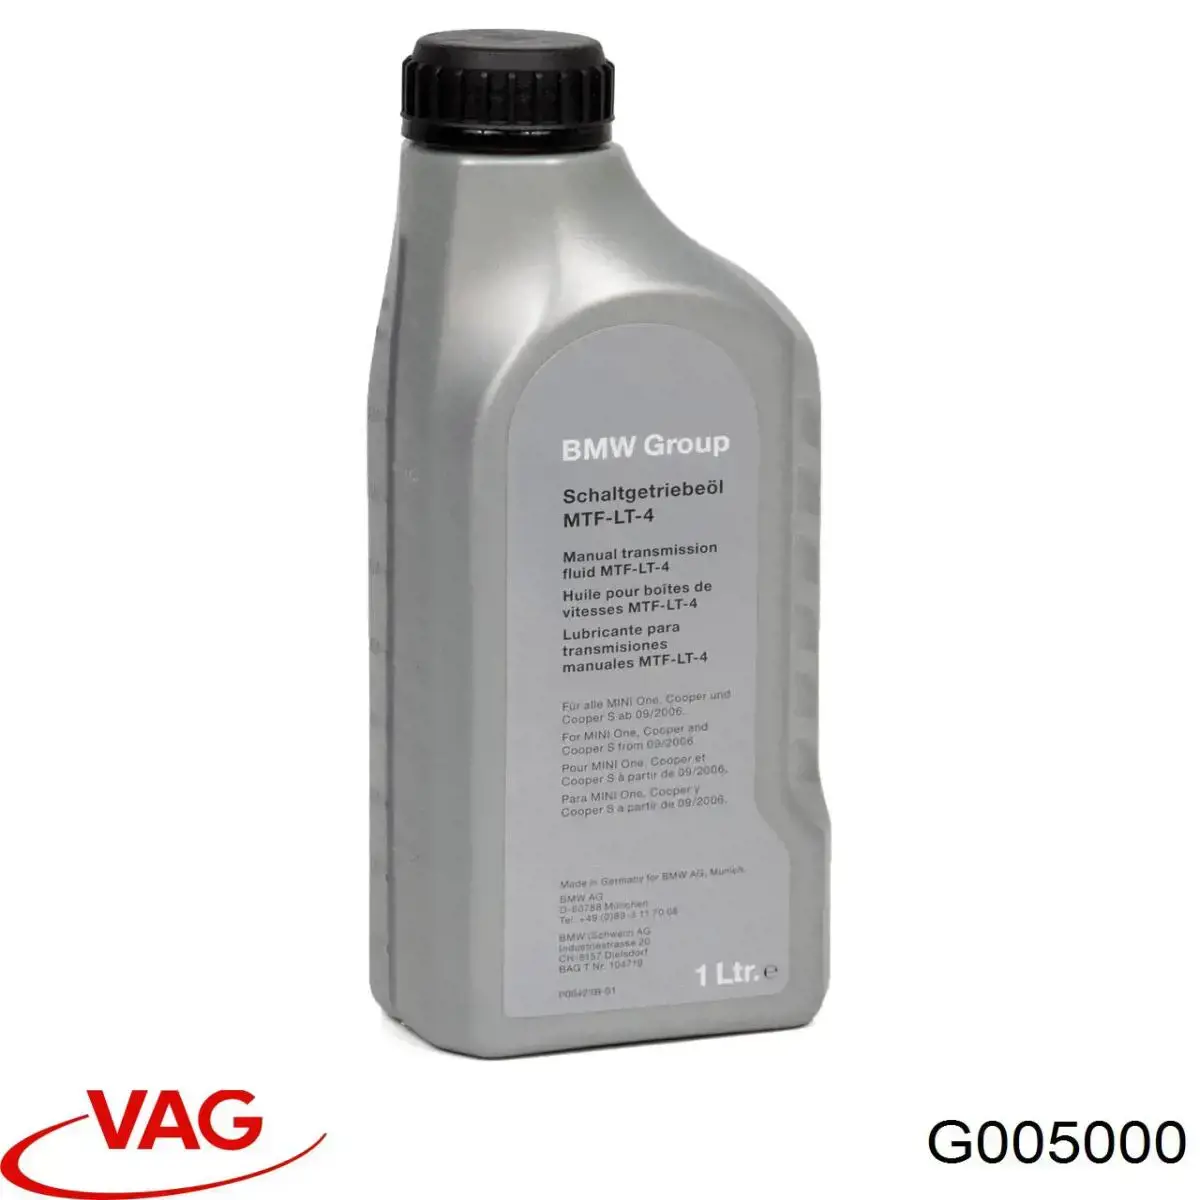 VAG Gear Oil 1 L Aceite transmisión (G005000)